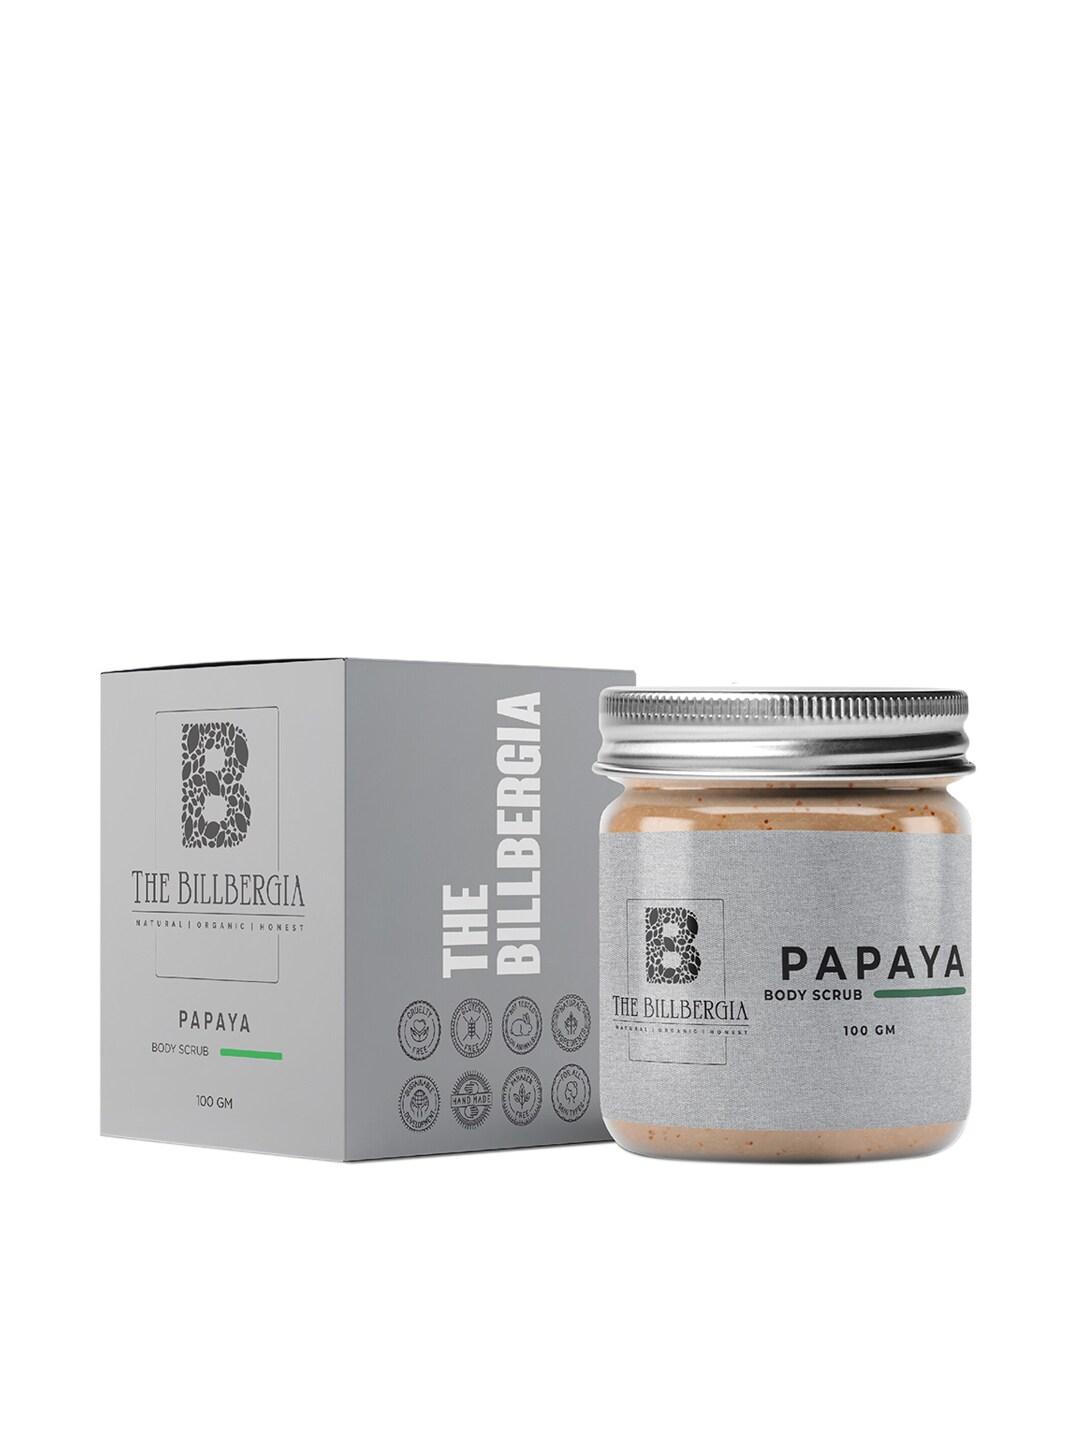 THE BILLBERGIA Papaya Body Scrub For Tan Removal & Skin Hydration 100Gm